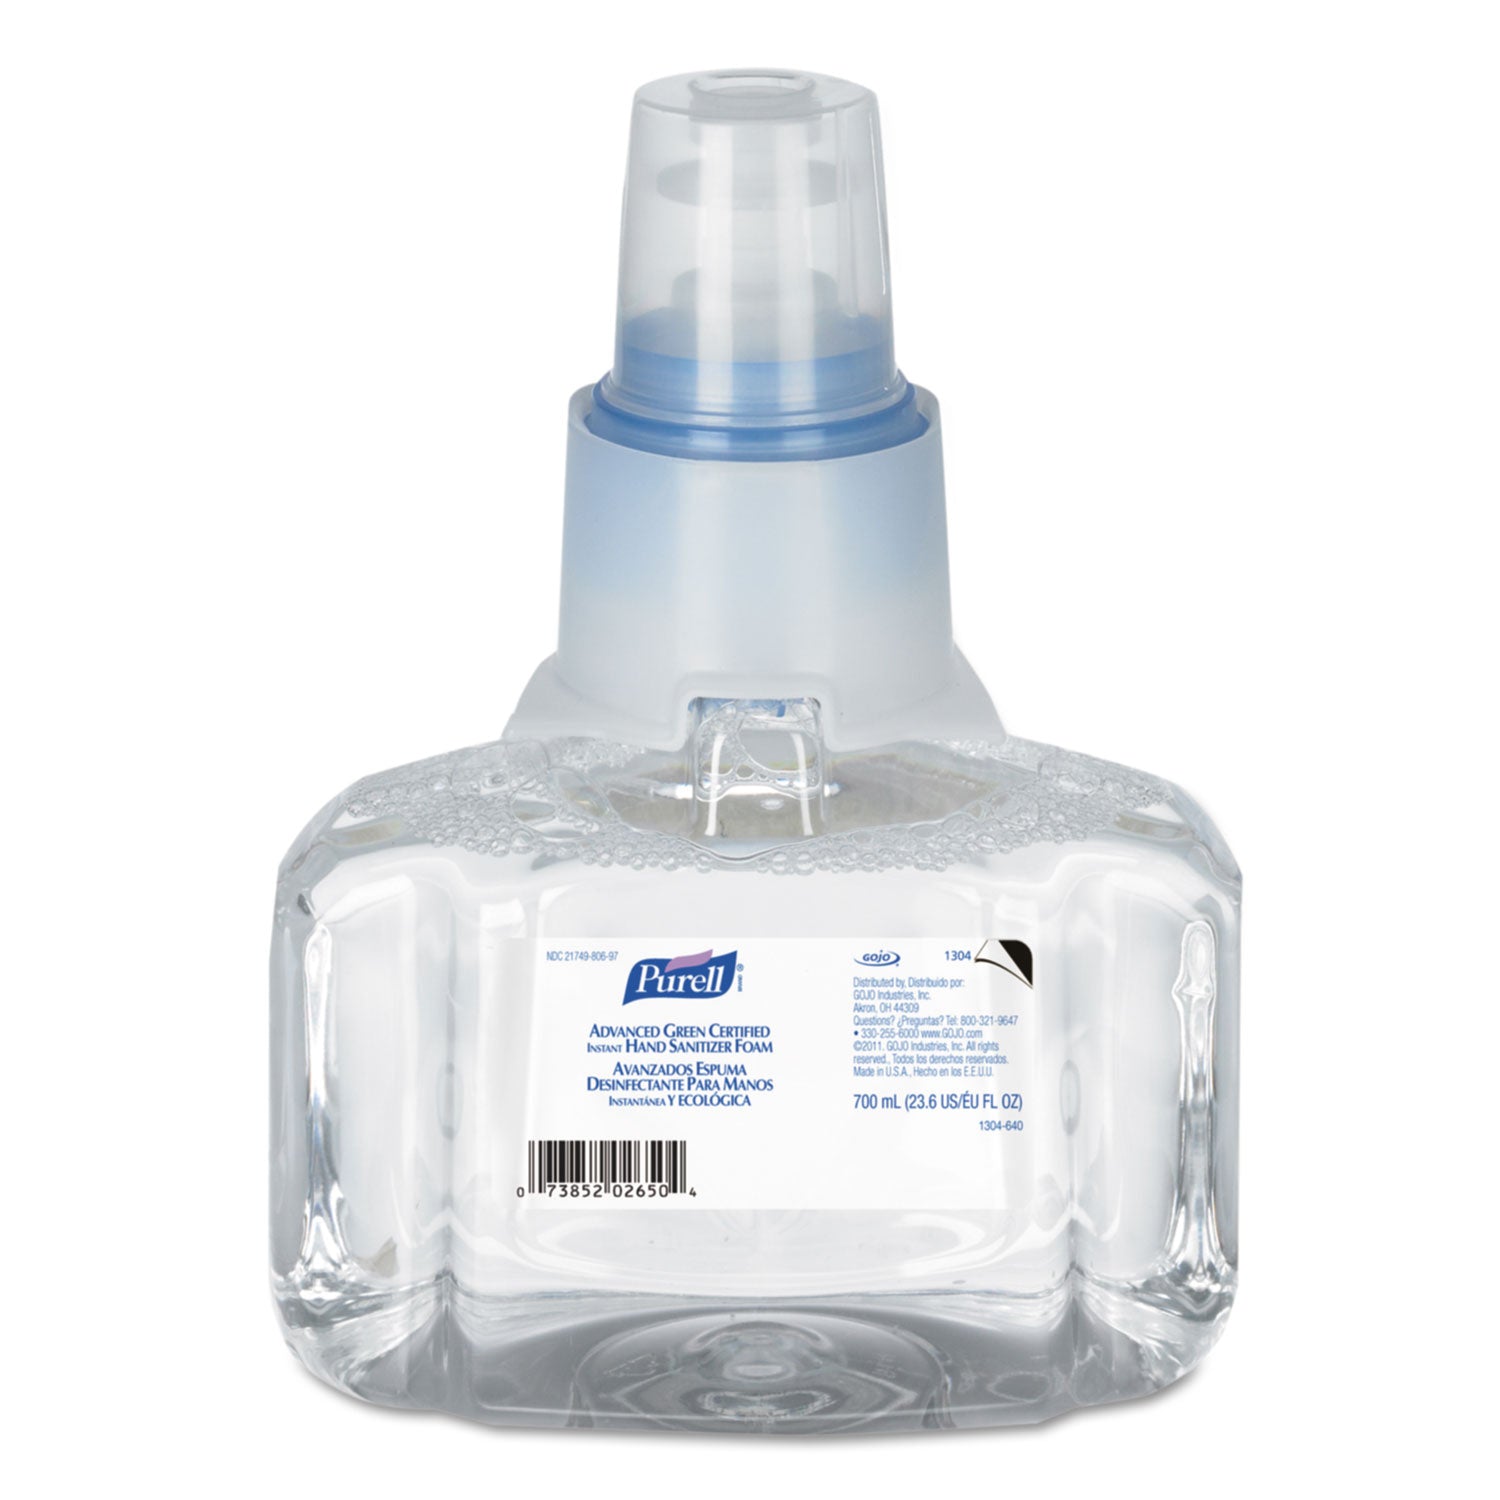 advanced-hand-sanitizer-green-certified-foam-refill-for-ltx-7-dispensers-700-ml-fragrance-free-3-carton_goj130403 - 1